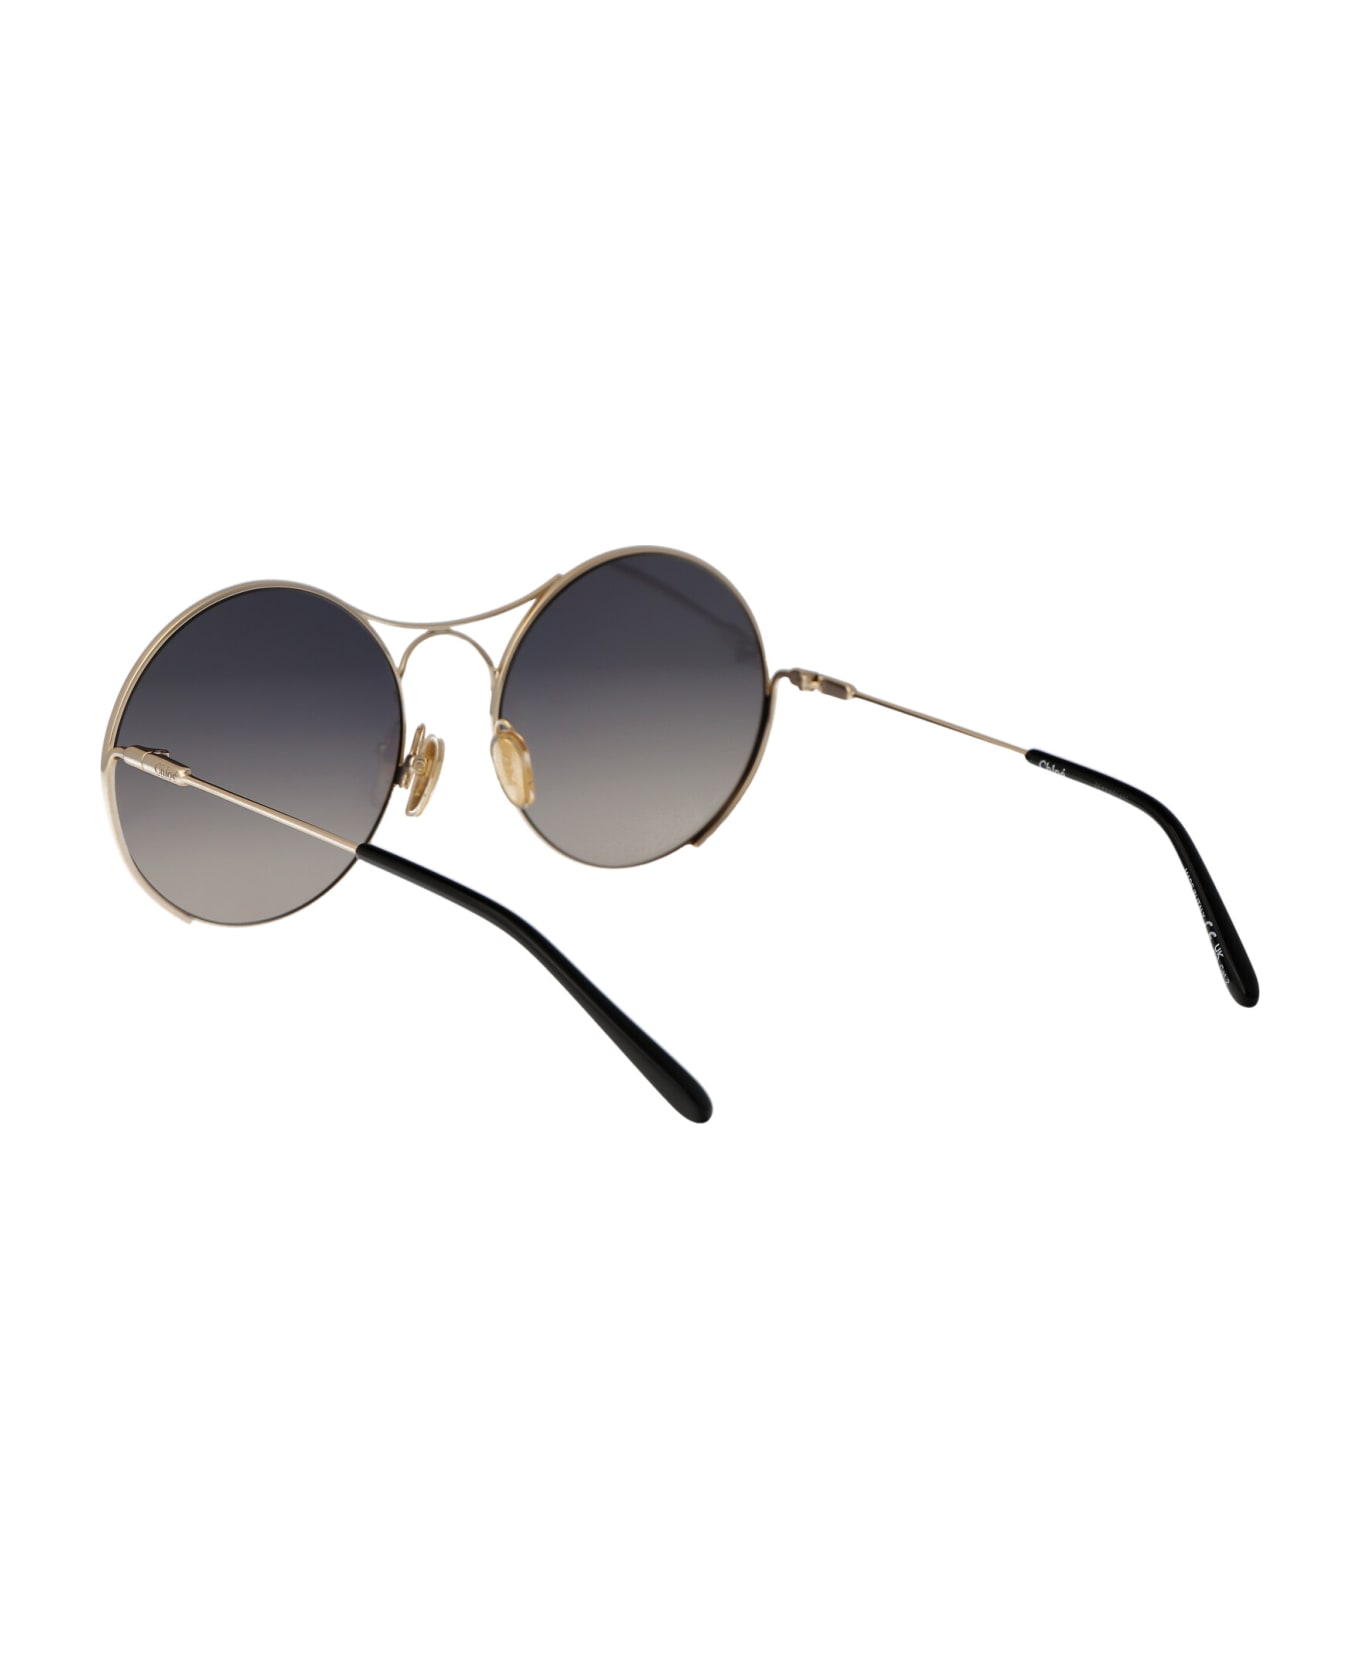 Chloé Eyewear Ch0166s Sunglasses - 001 GOLD GOLD GREY